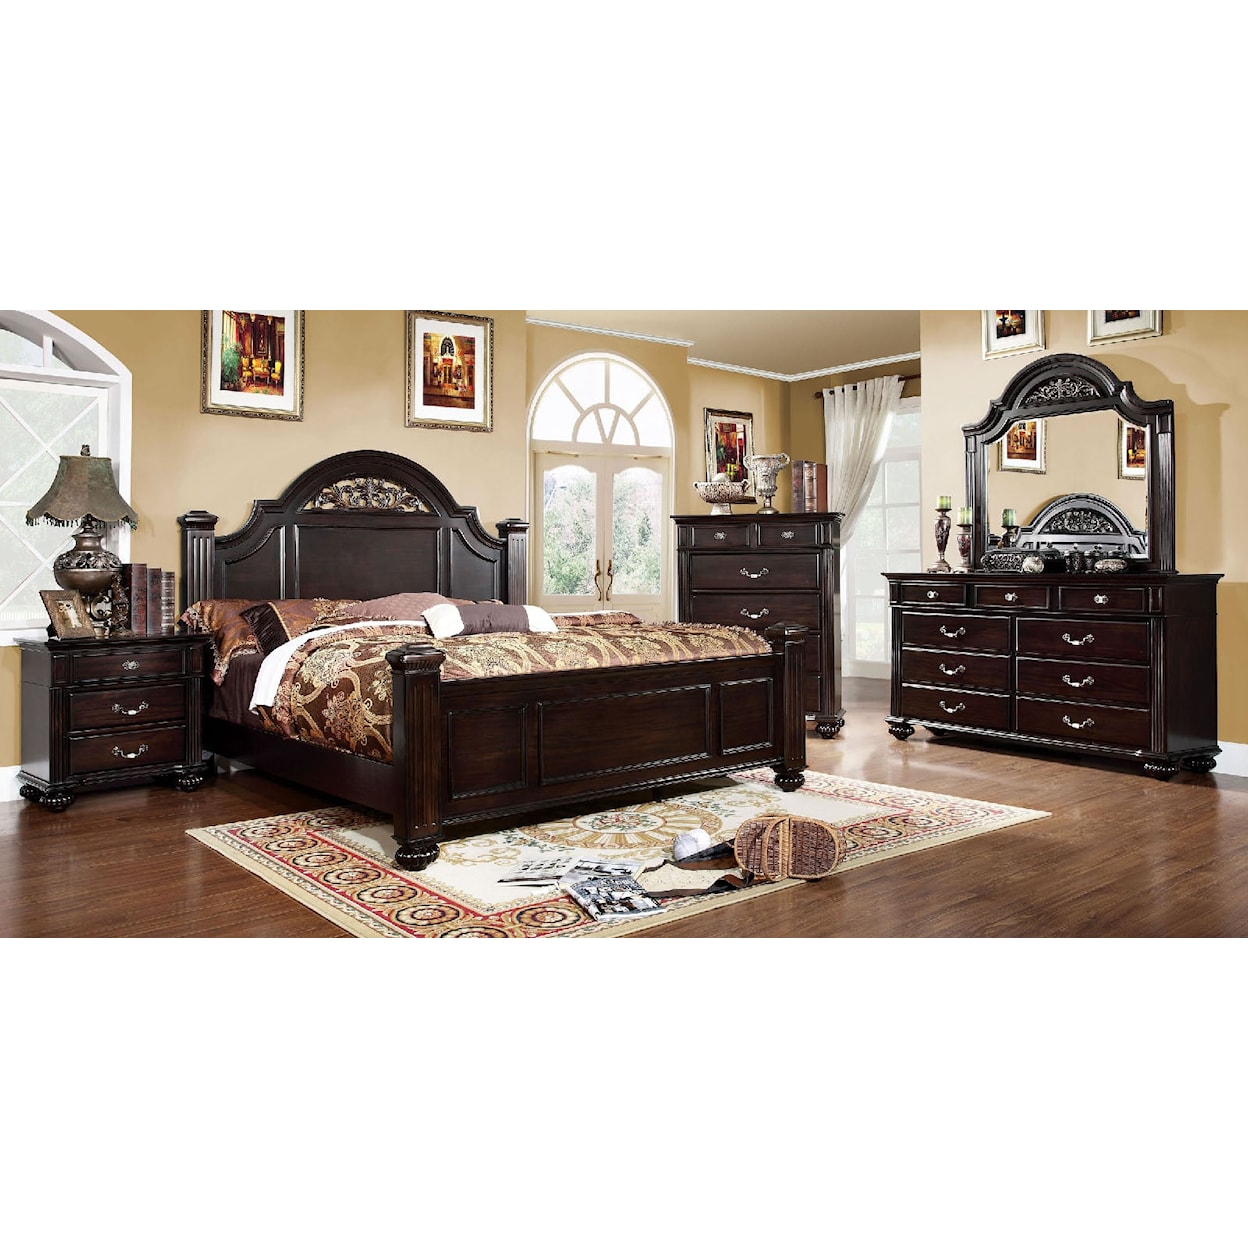 Furniture of America Syracuse 5-Piece Queen Bedroom Set